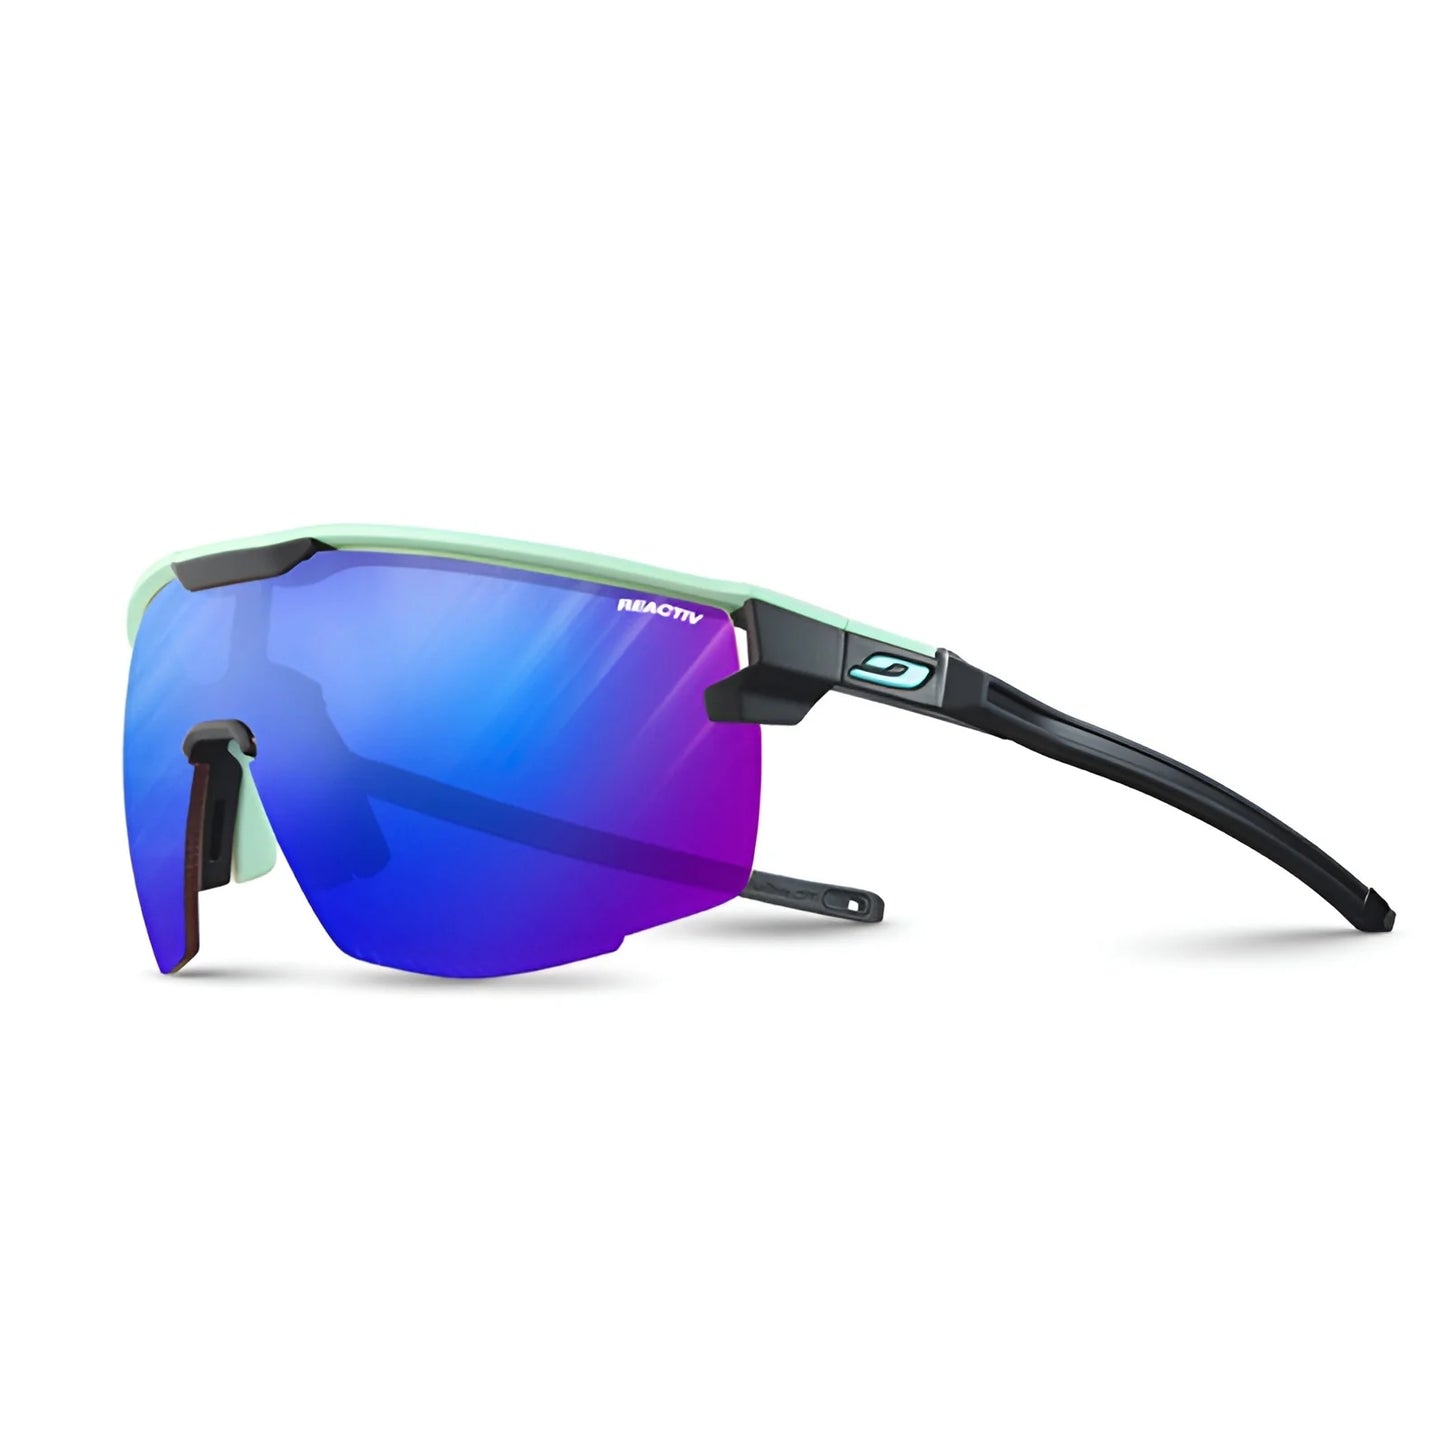 Julbo Ultimate Sunglasses Mint / Black / REACTIV 1 & 3 High Contrast (VLT 13..72%)